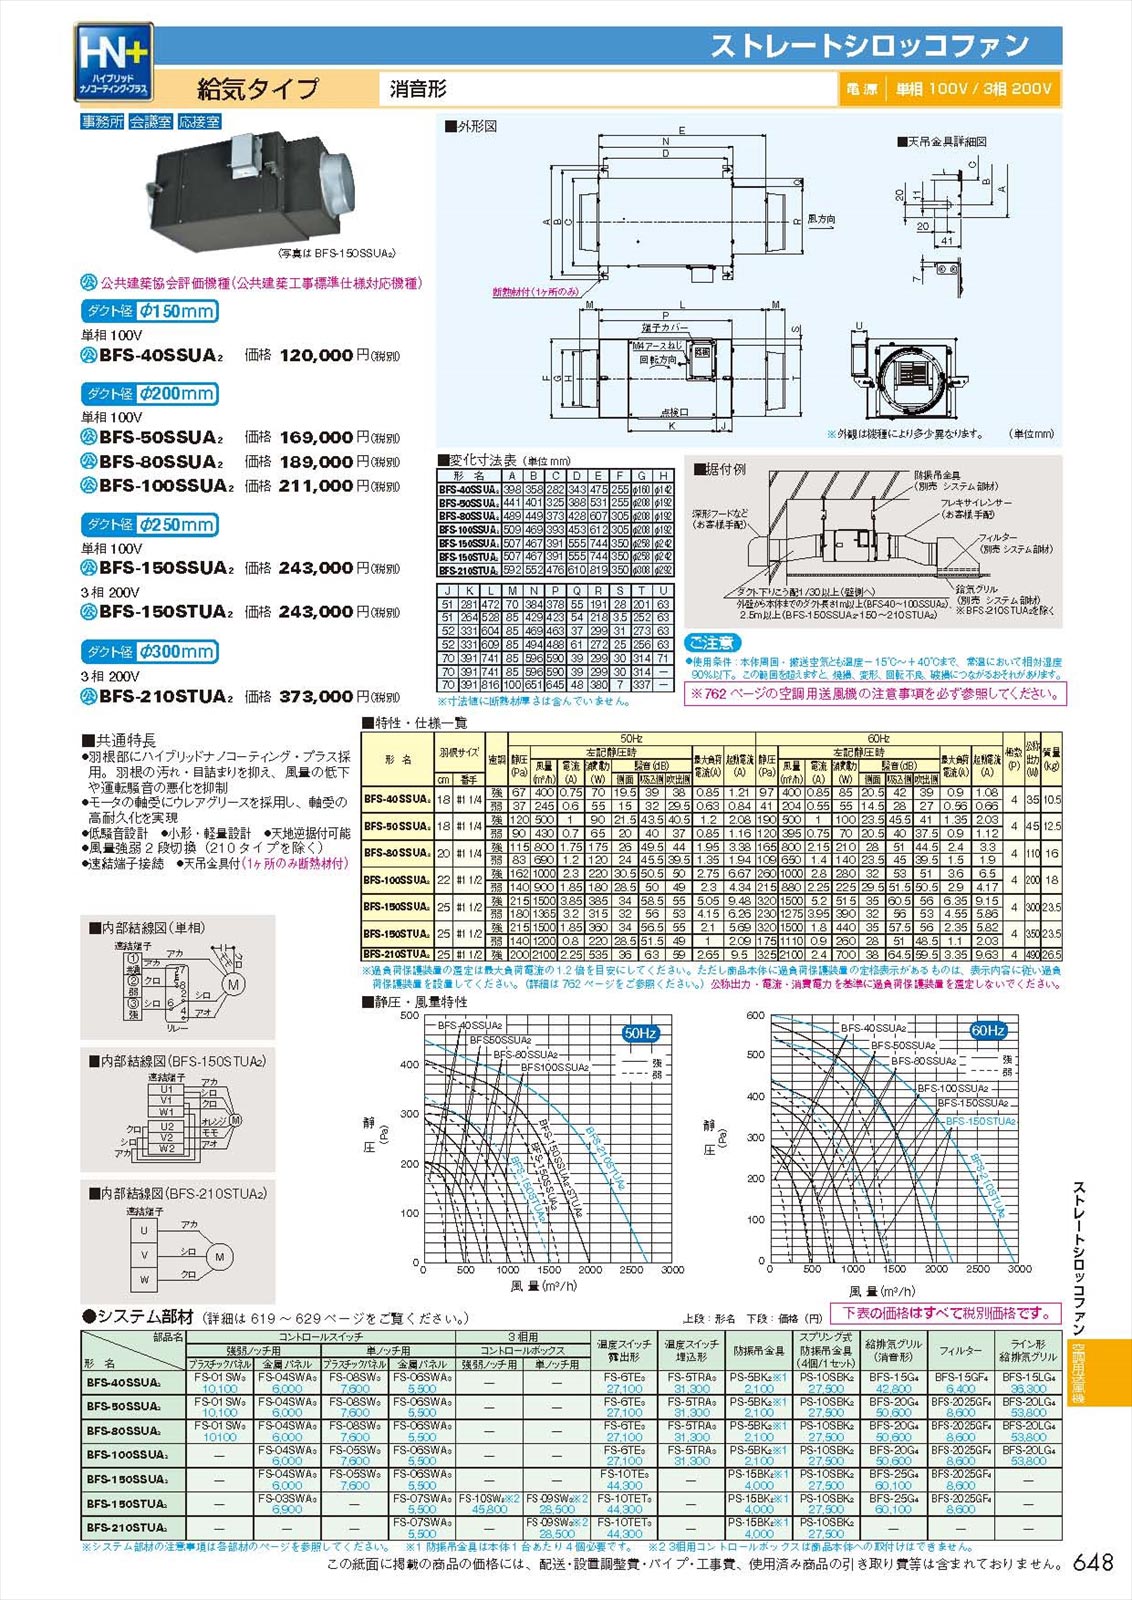 BFS-80SSUA2】 《KJK》 三菱電機 ストレートシロッコファン 給気タイプ消音形 ωτ0 :bfs-80ssua2:KJK 通販  